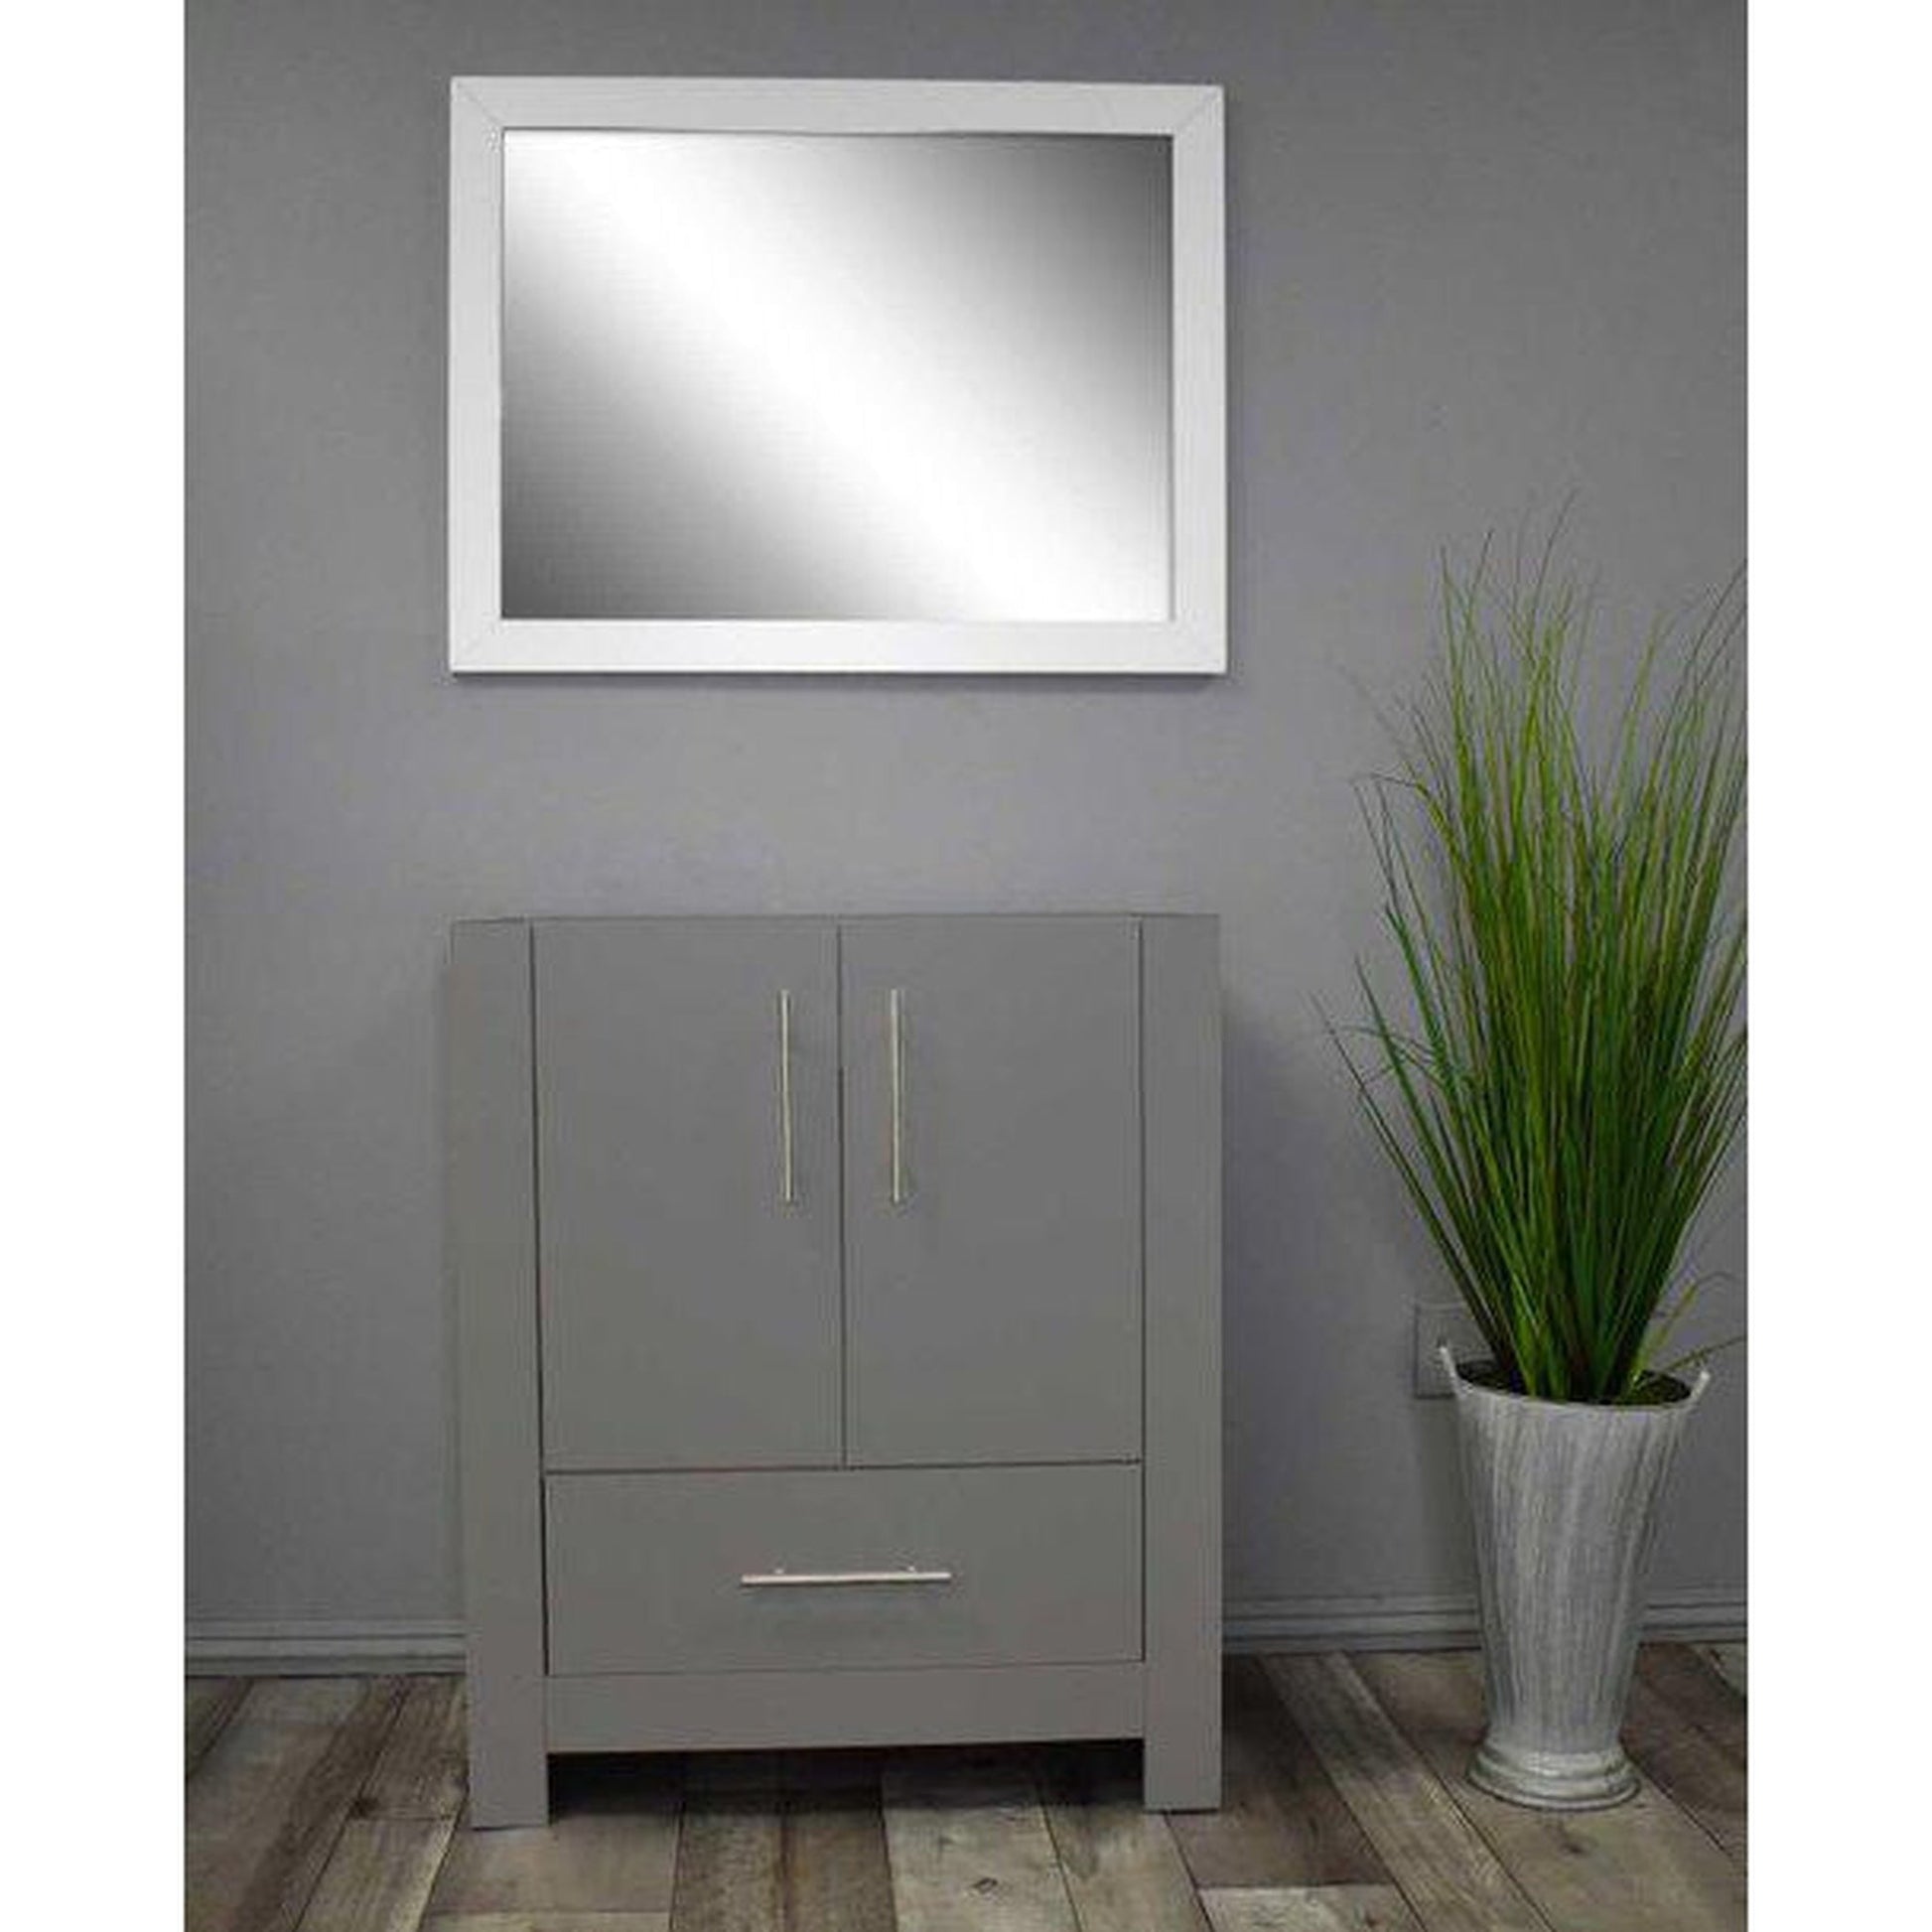 Volpa USA Boston 30" x 20" Gray Modern Freestanding Bathroom Vanity With Brushed Nickel Handles